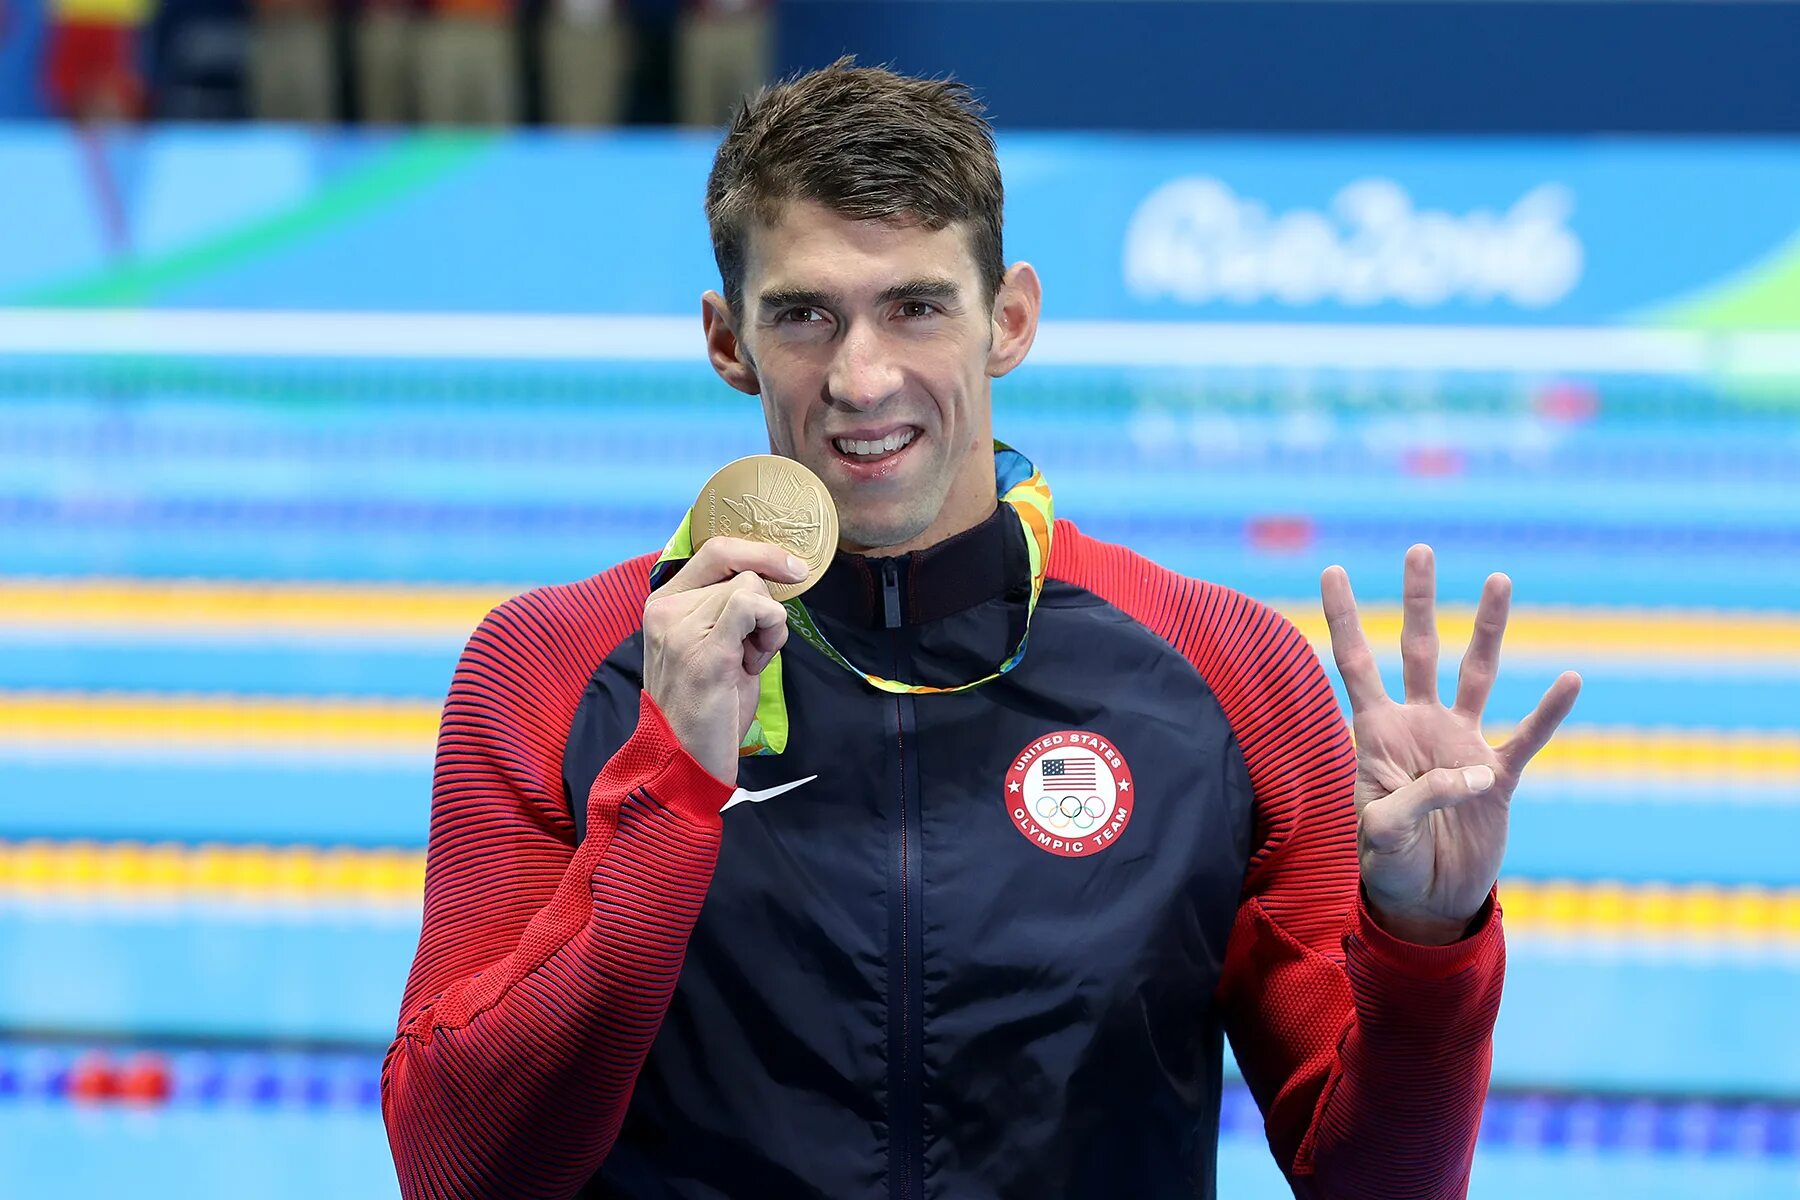 Michael Phelps. Michael first